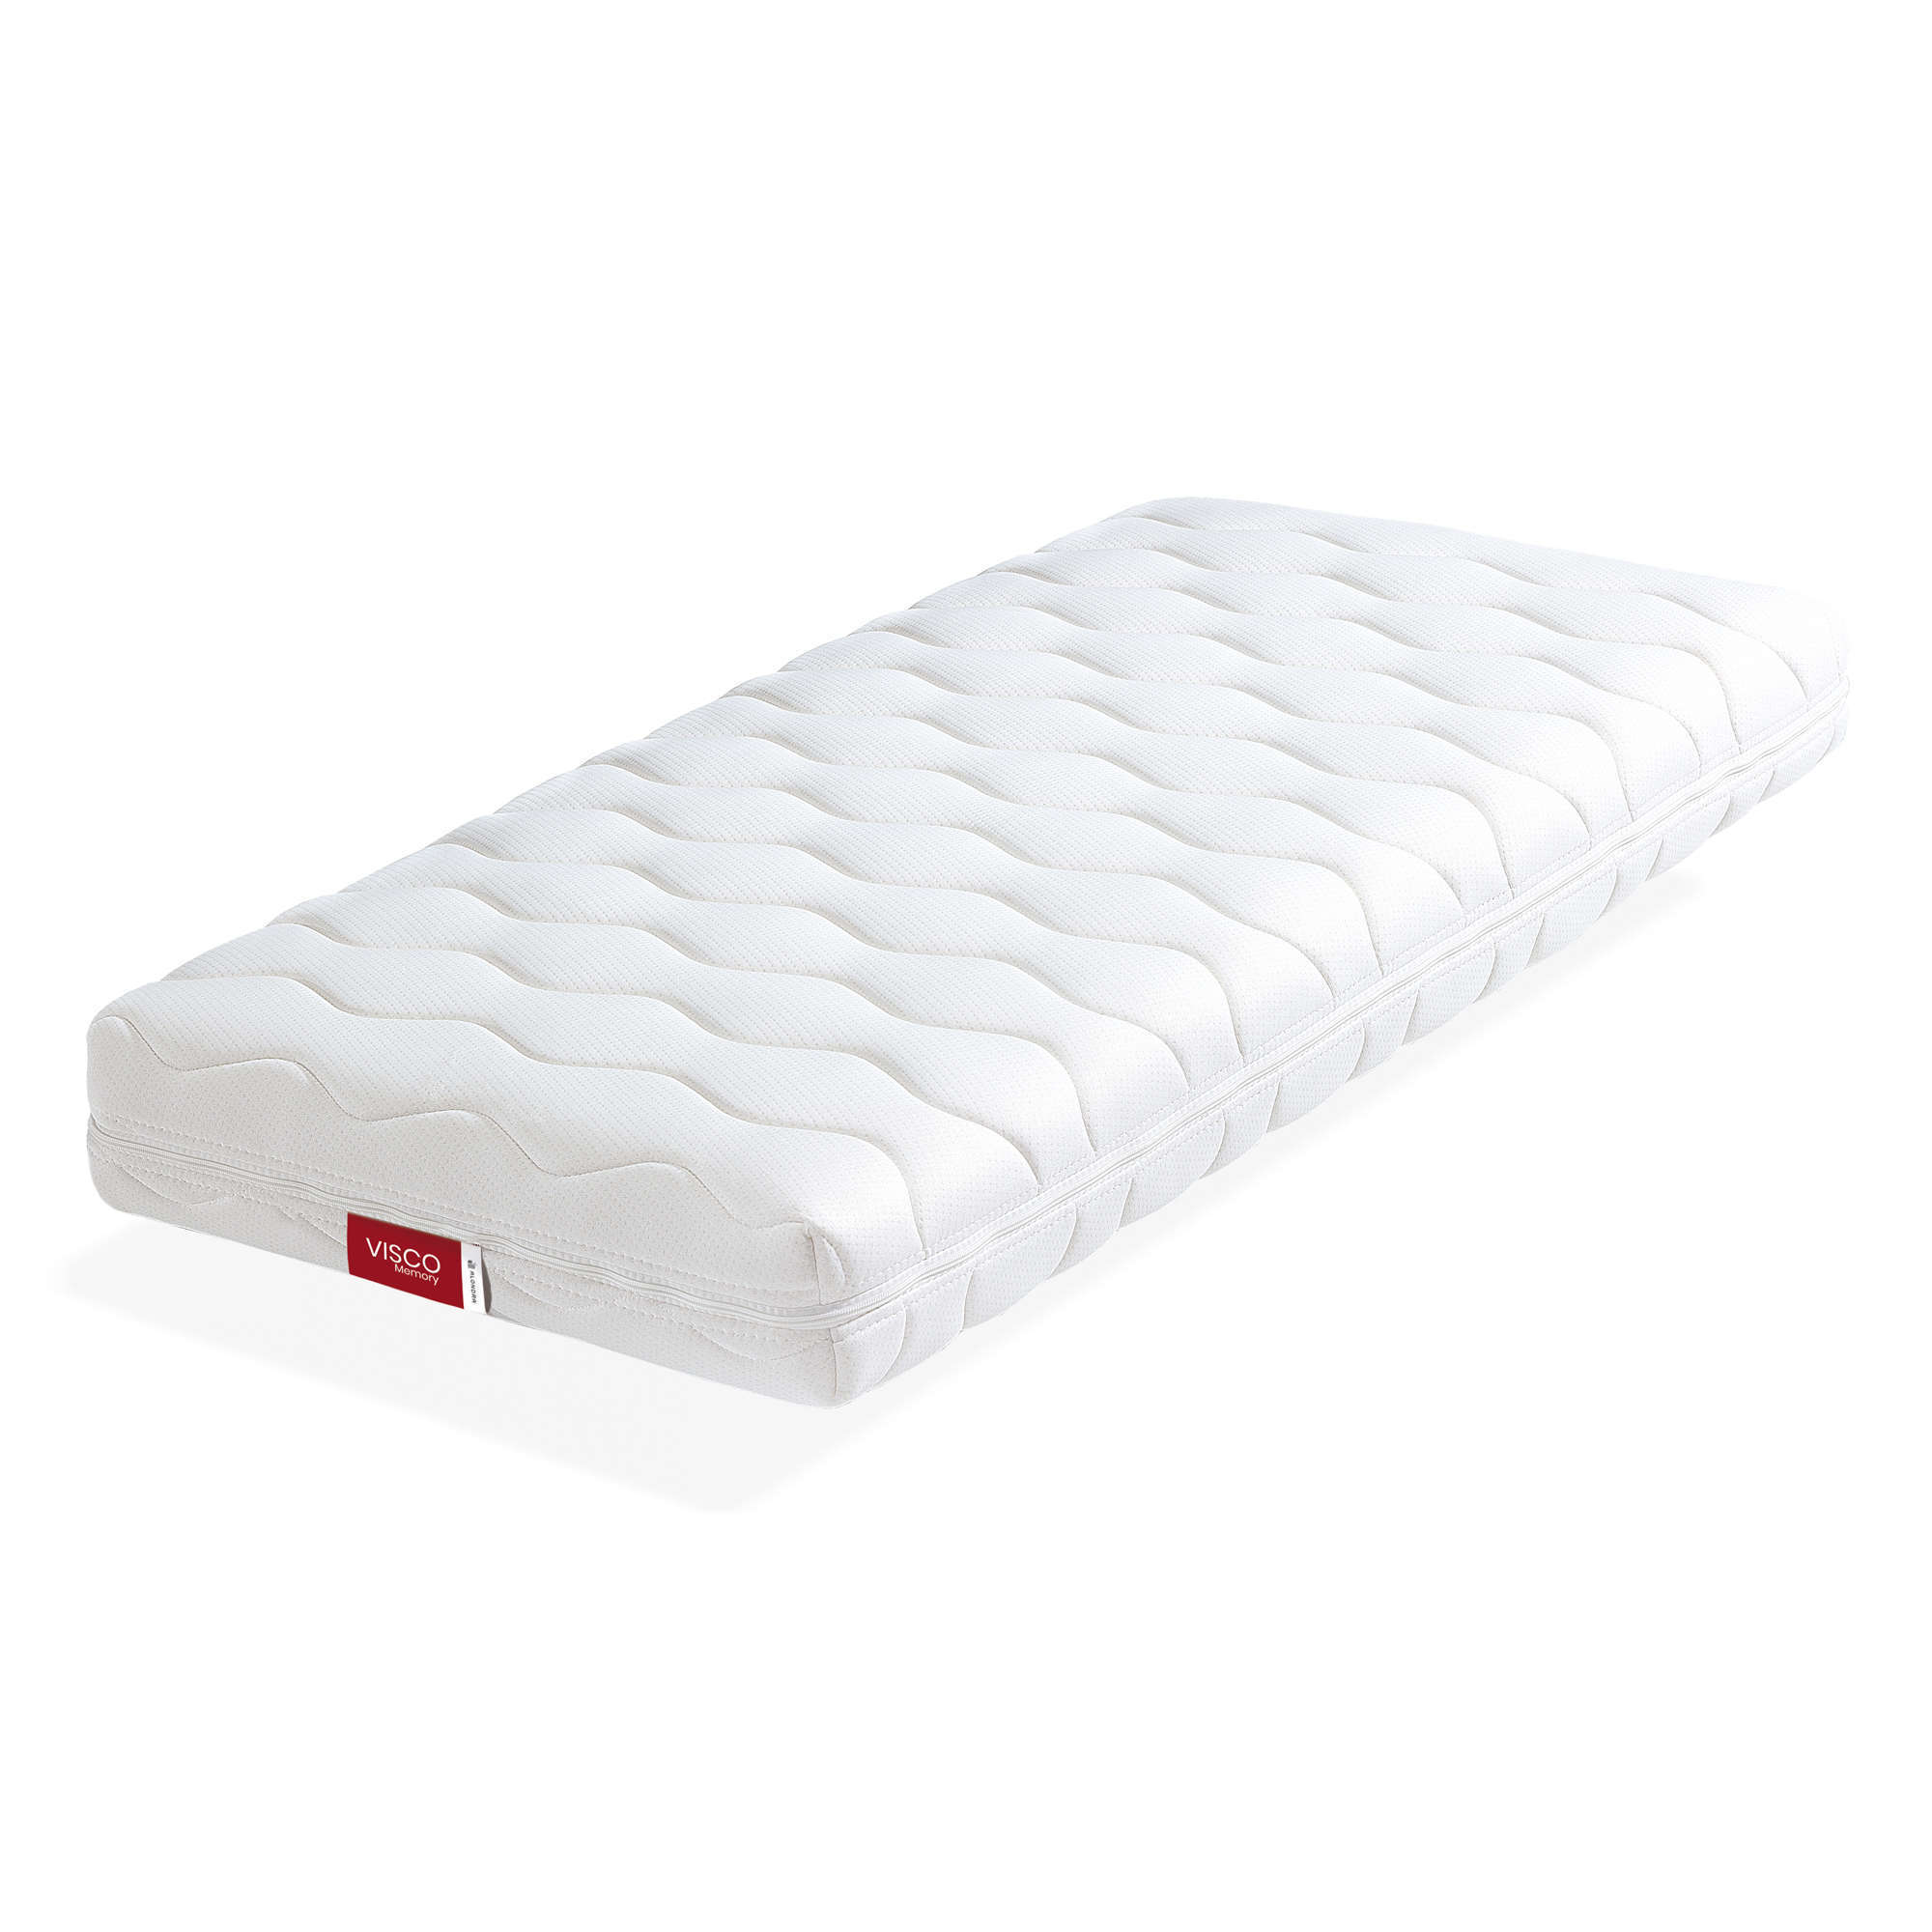 Memory foam mattress for convertible crib